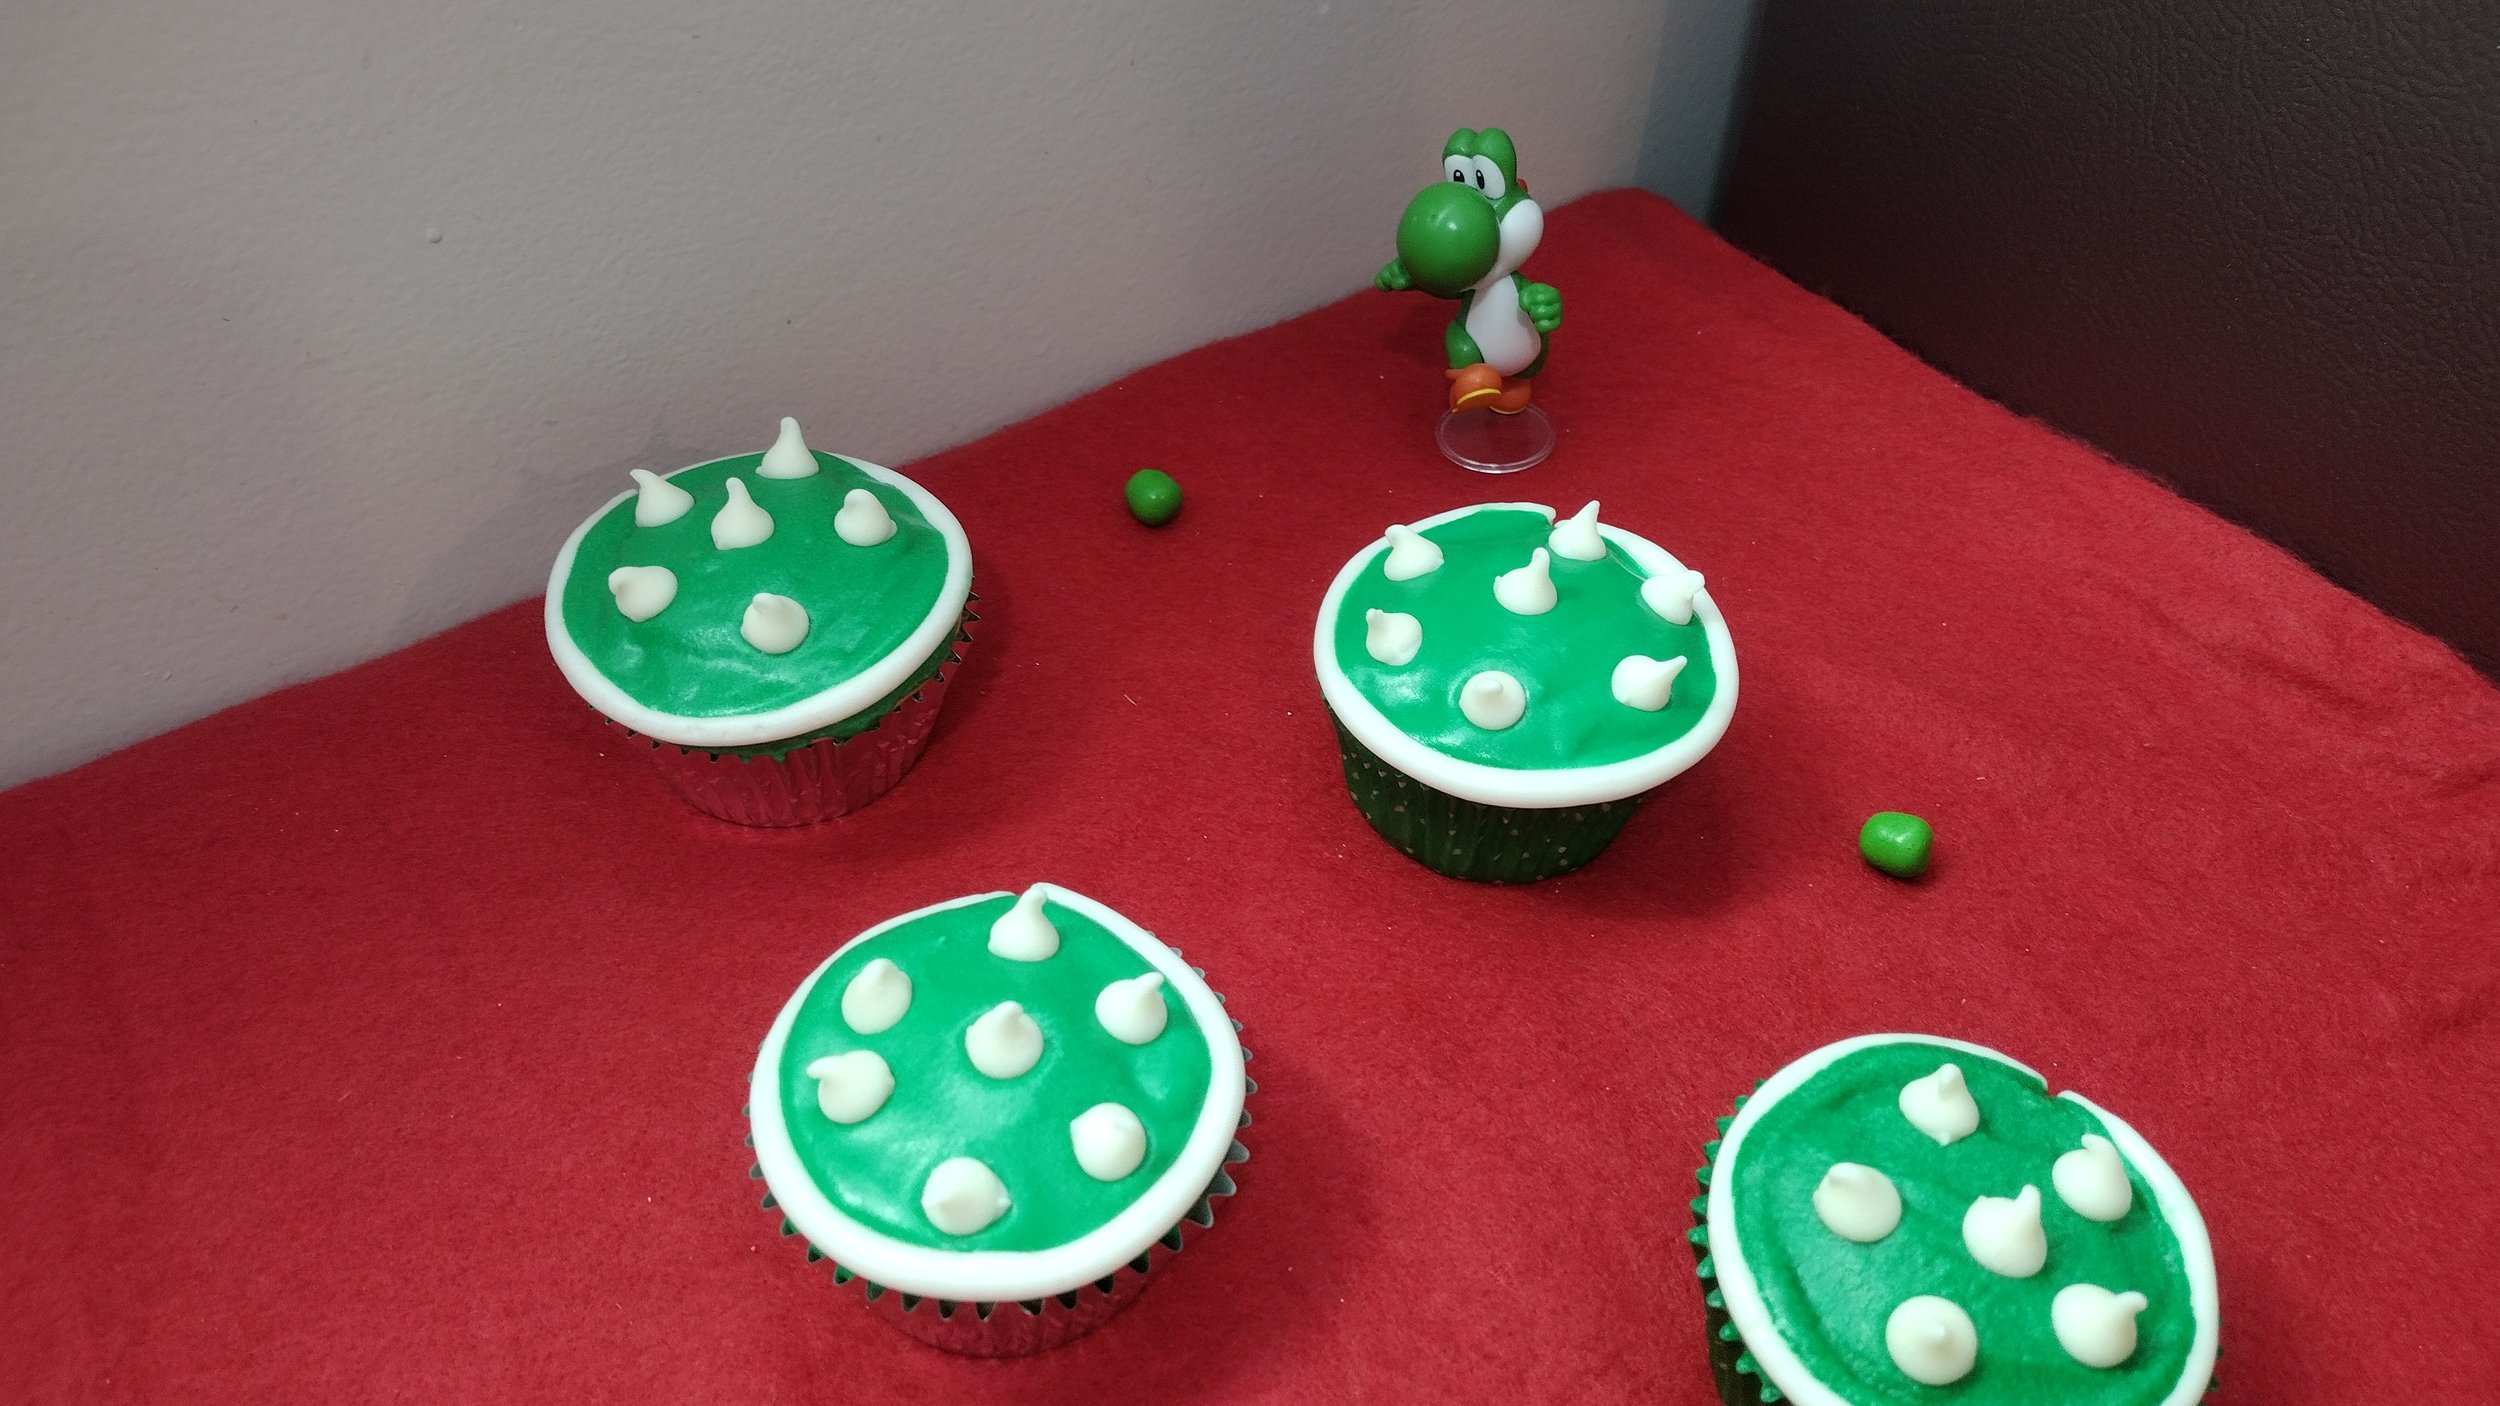 Make Super Mario-Themed Treats with Mario Mushroom Cookie Cutter